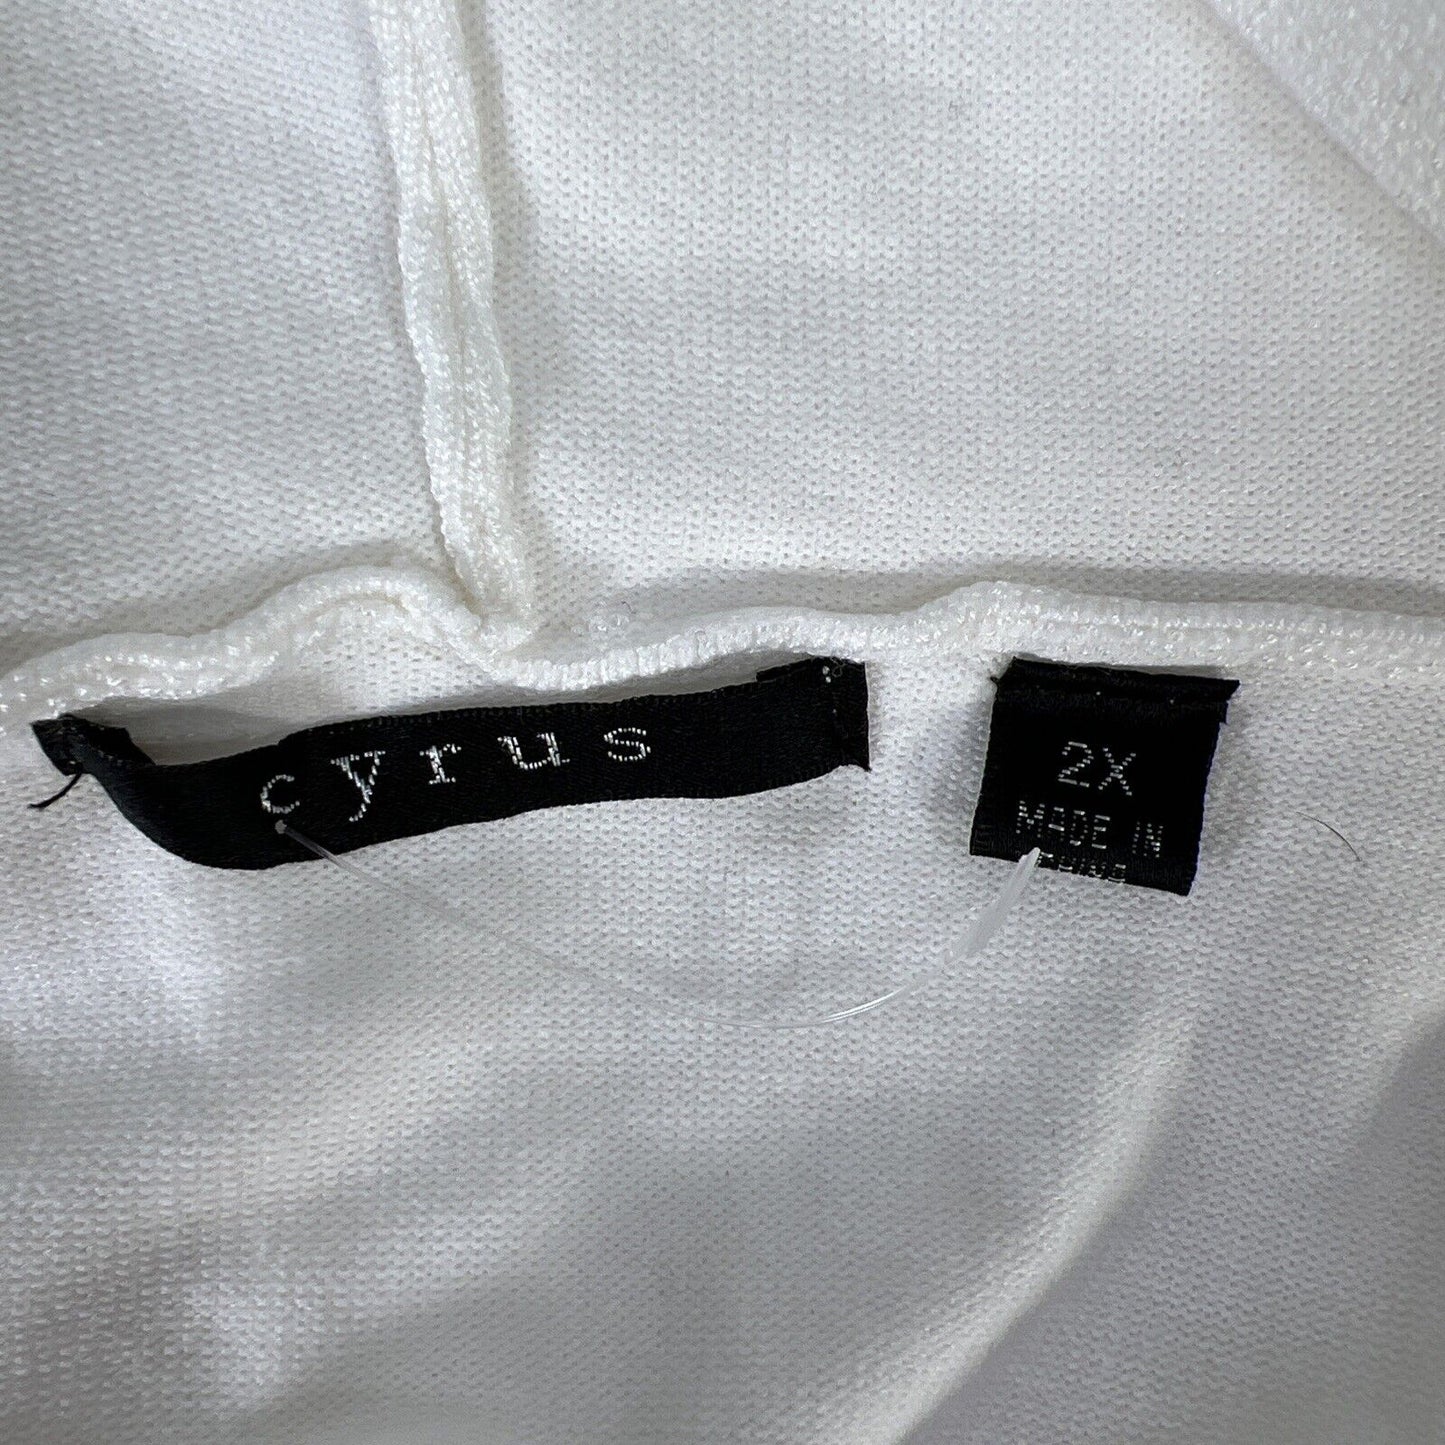 NEW Cyrus Women's Bone Ivory Sleeveless Cardigan Sweater - Plus 2X